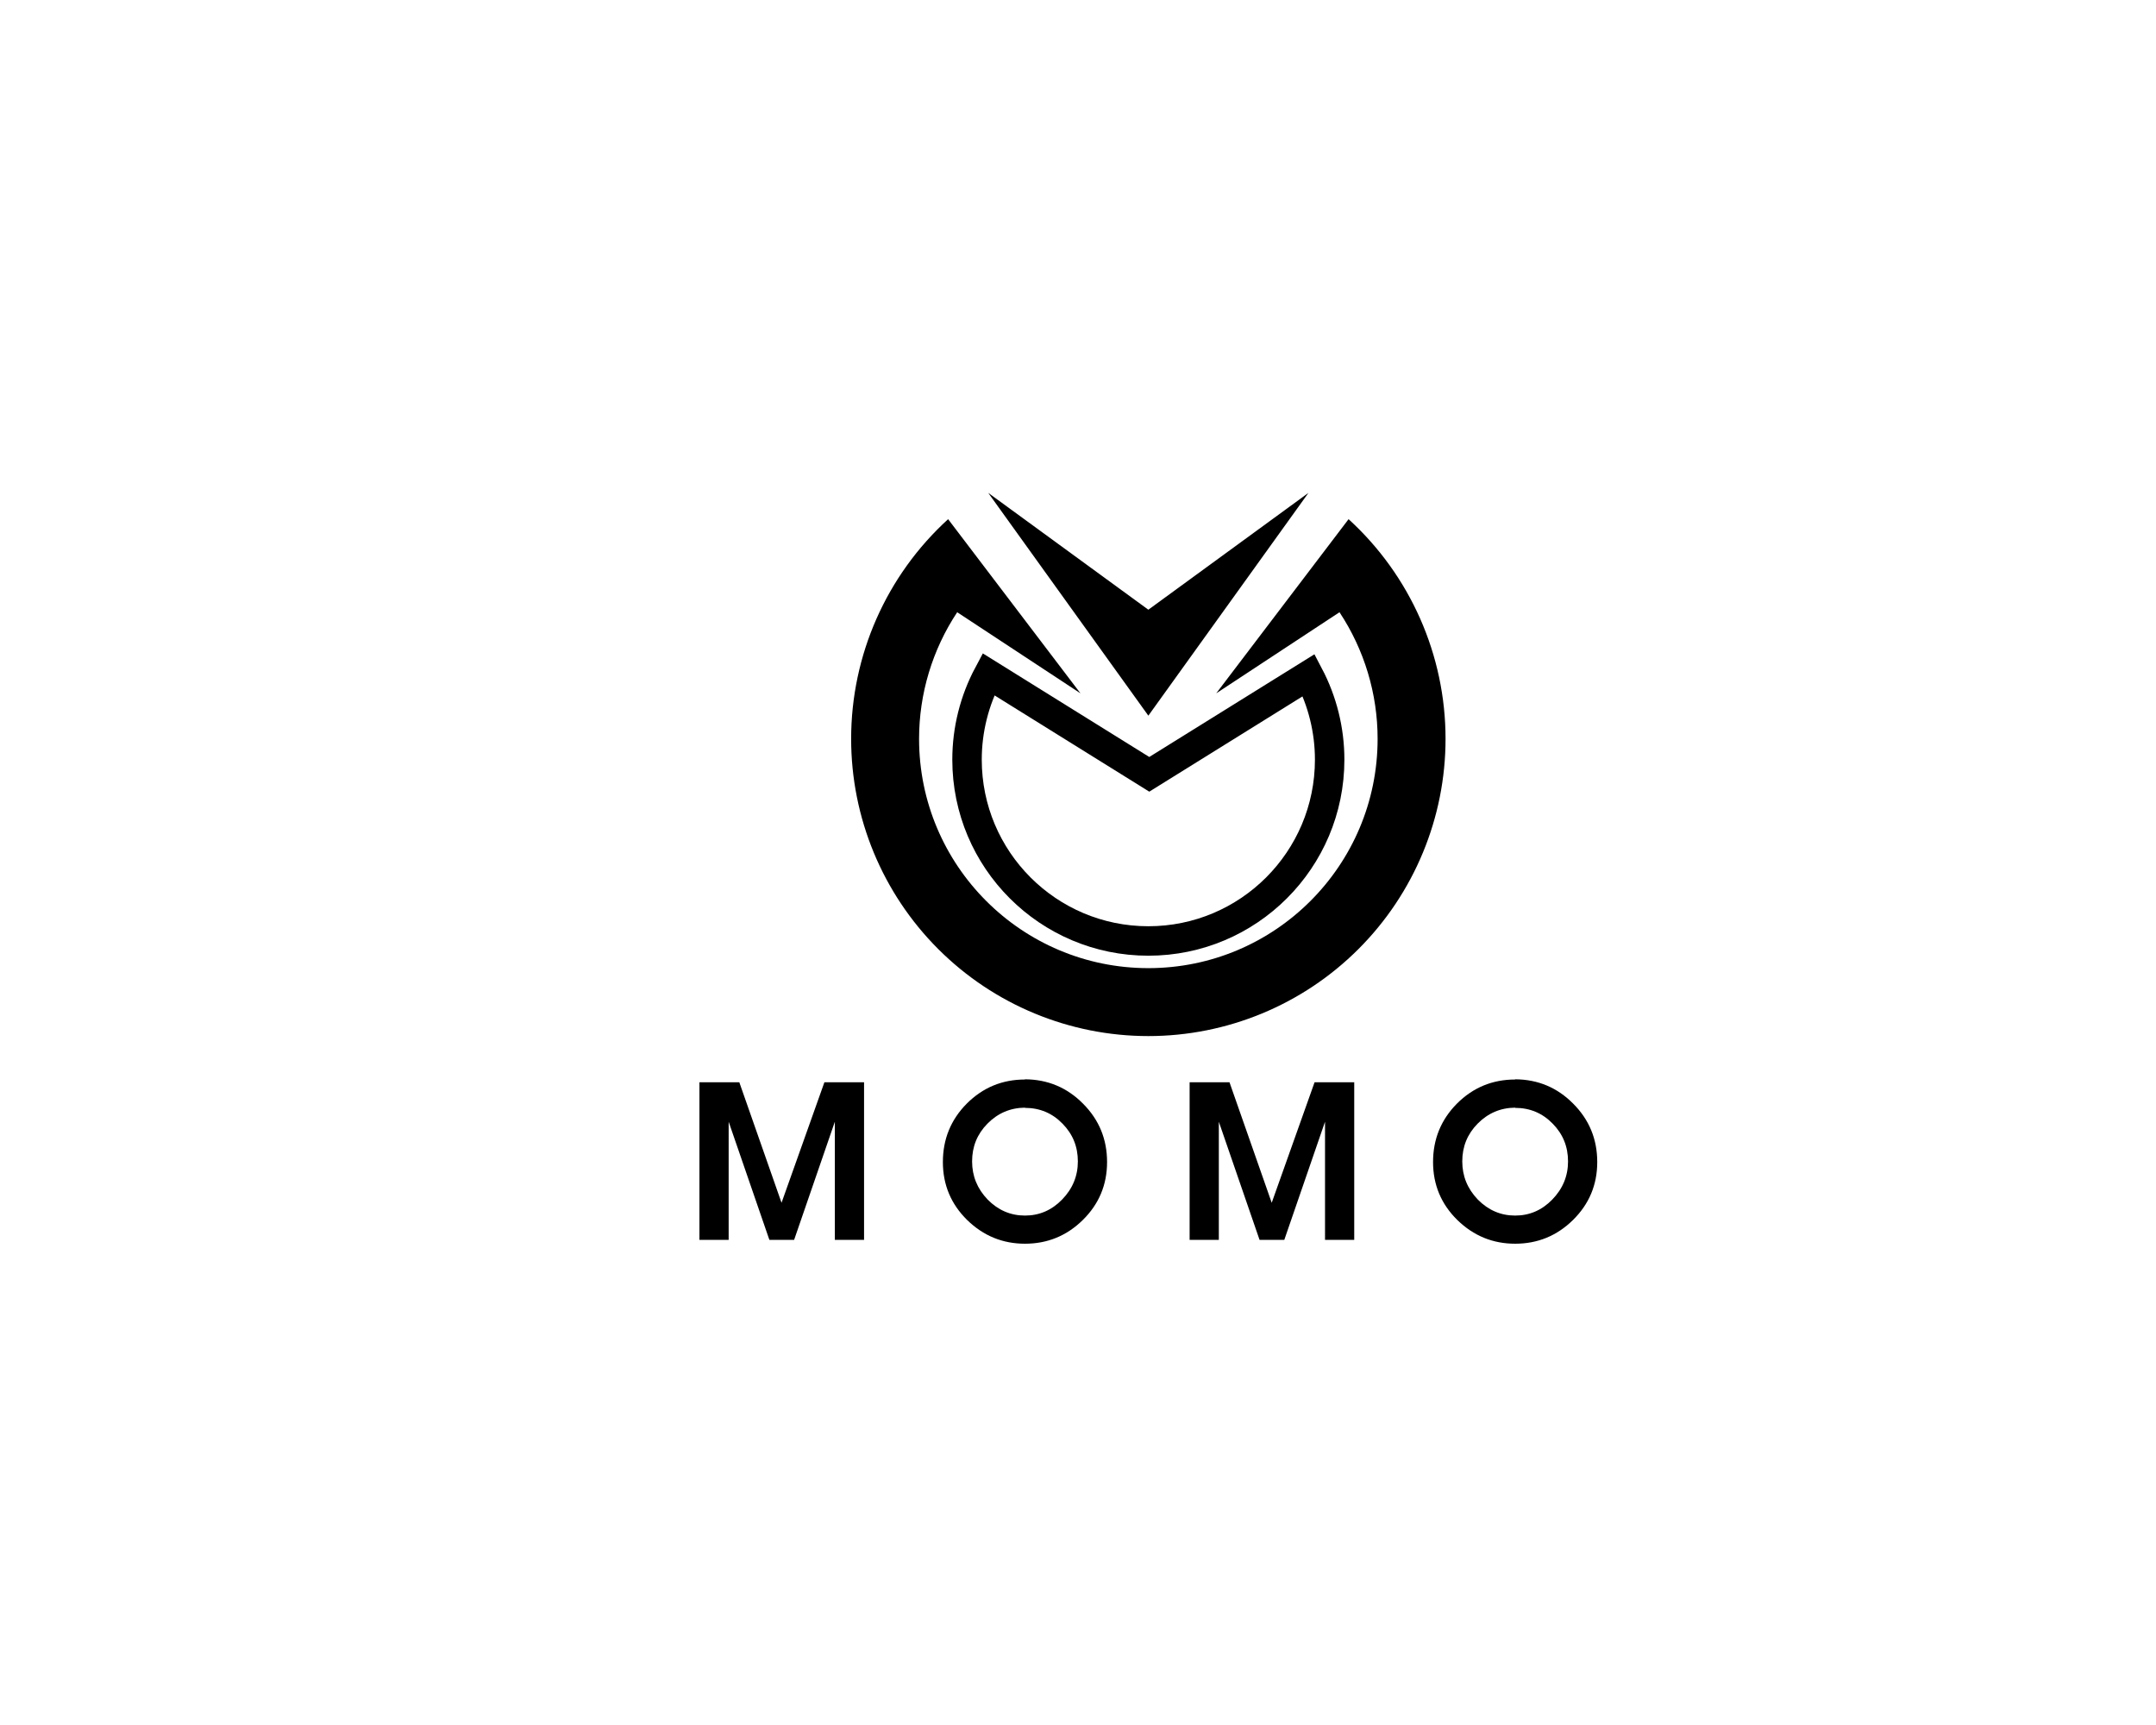 Download Momo Logo - Momo Mobile Money Logo - Full Size PNG Image - PNGkit